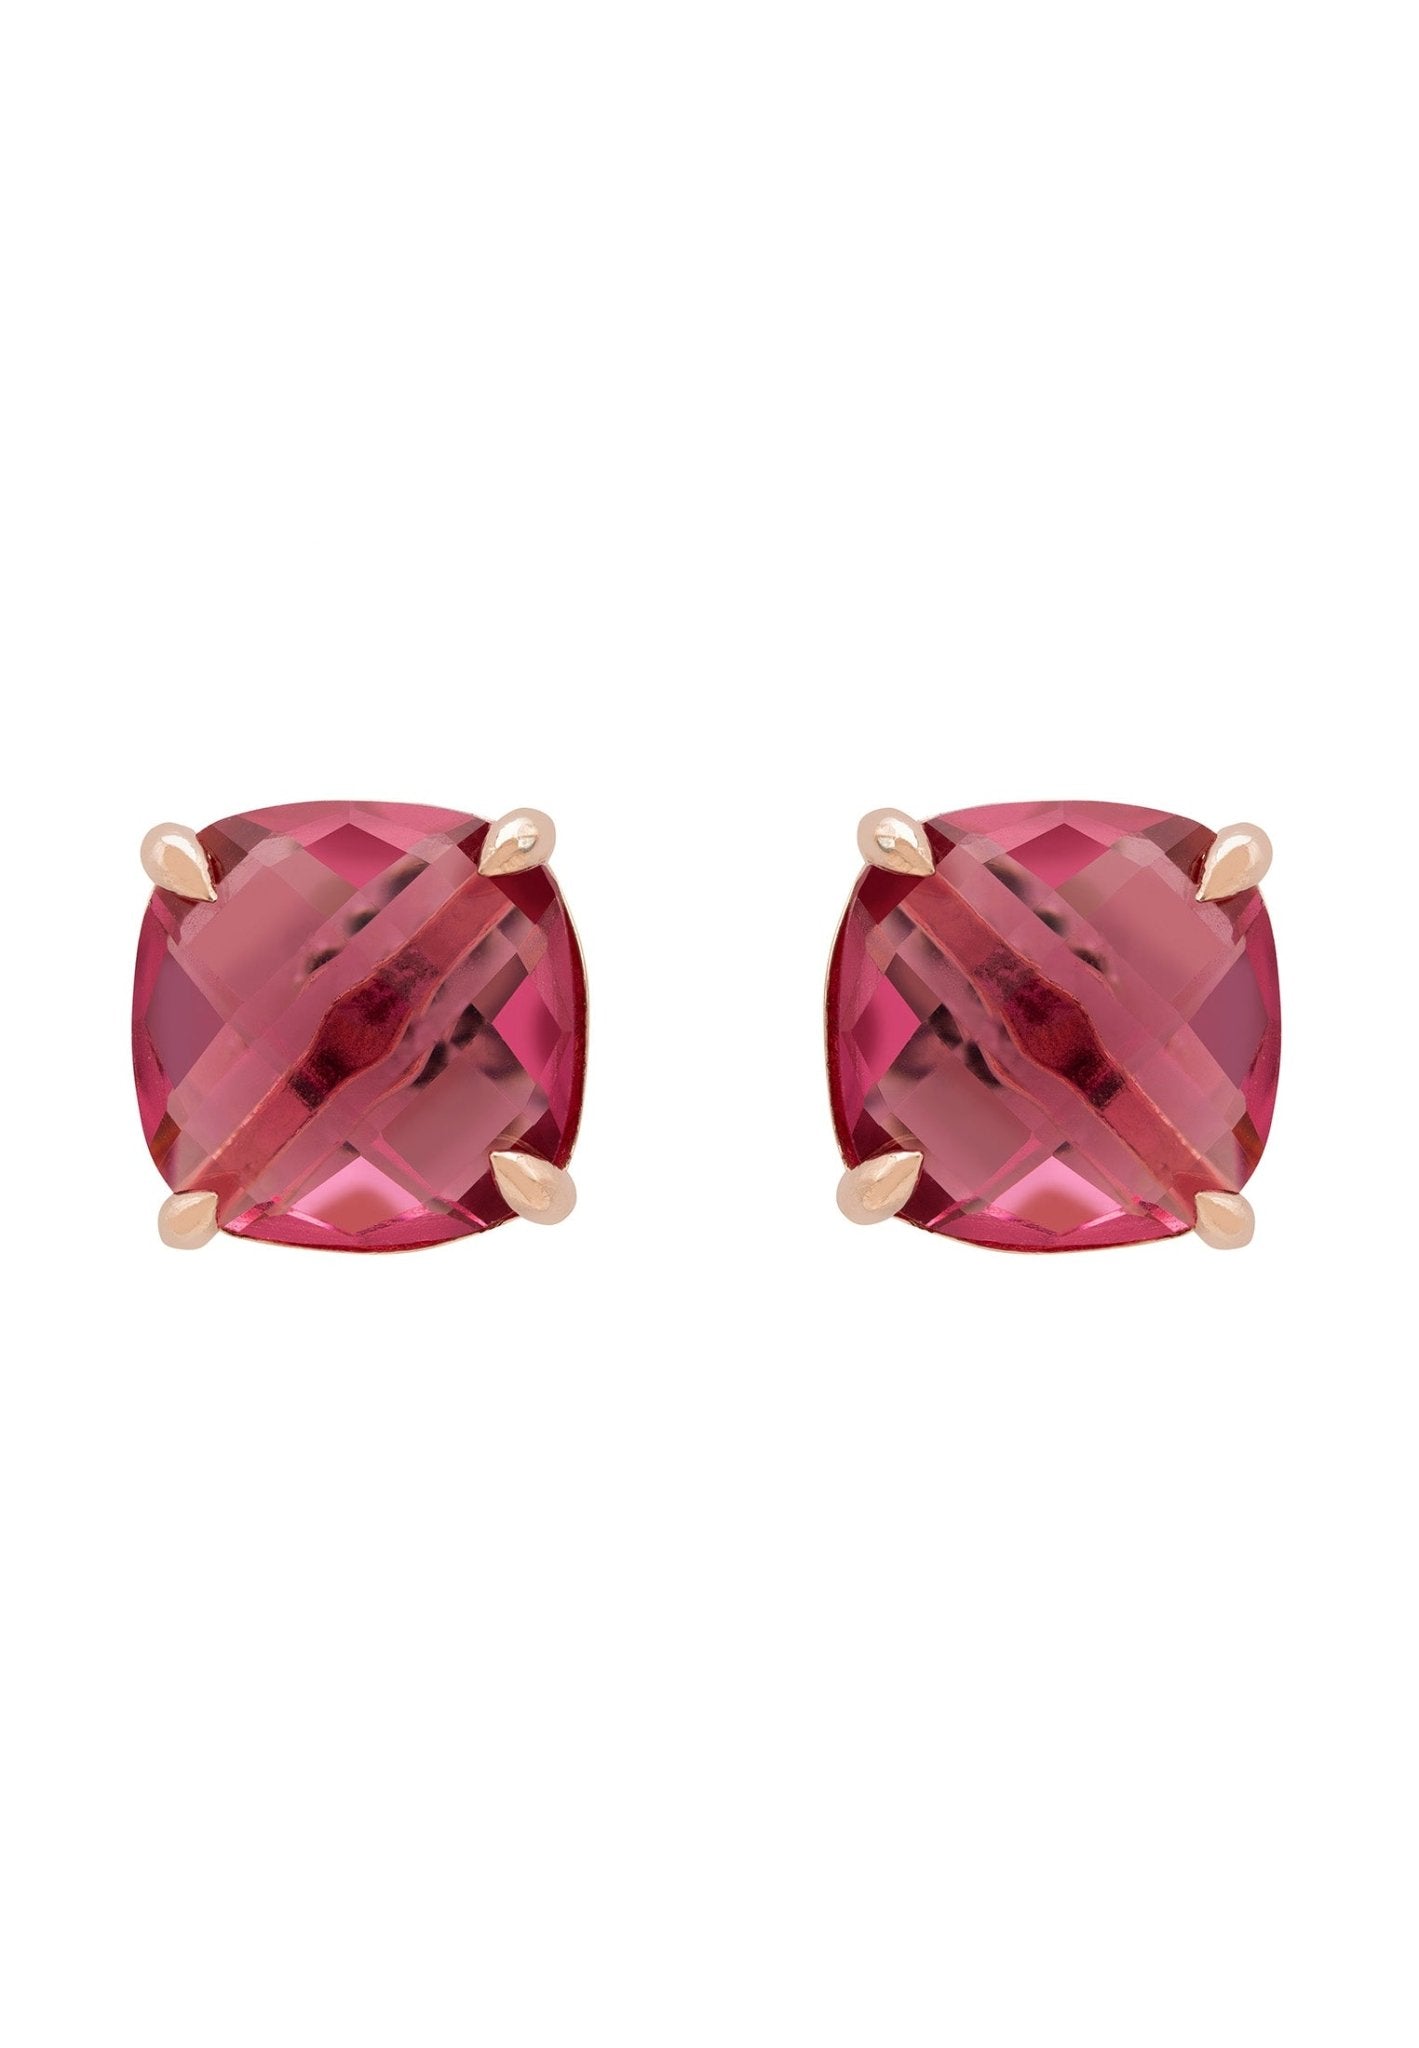 Empress Gemstone Stud Earrings Rosegold Pink Tourmaline - lolaluxeshop